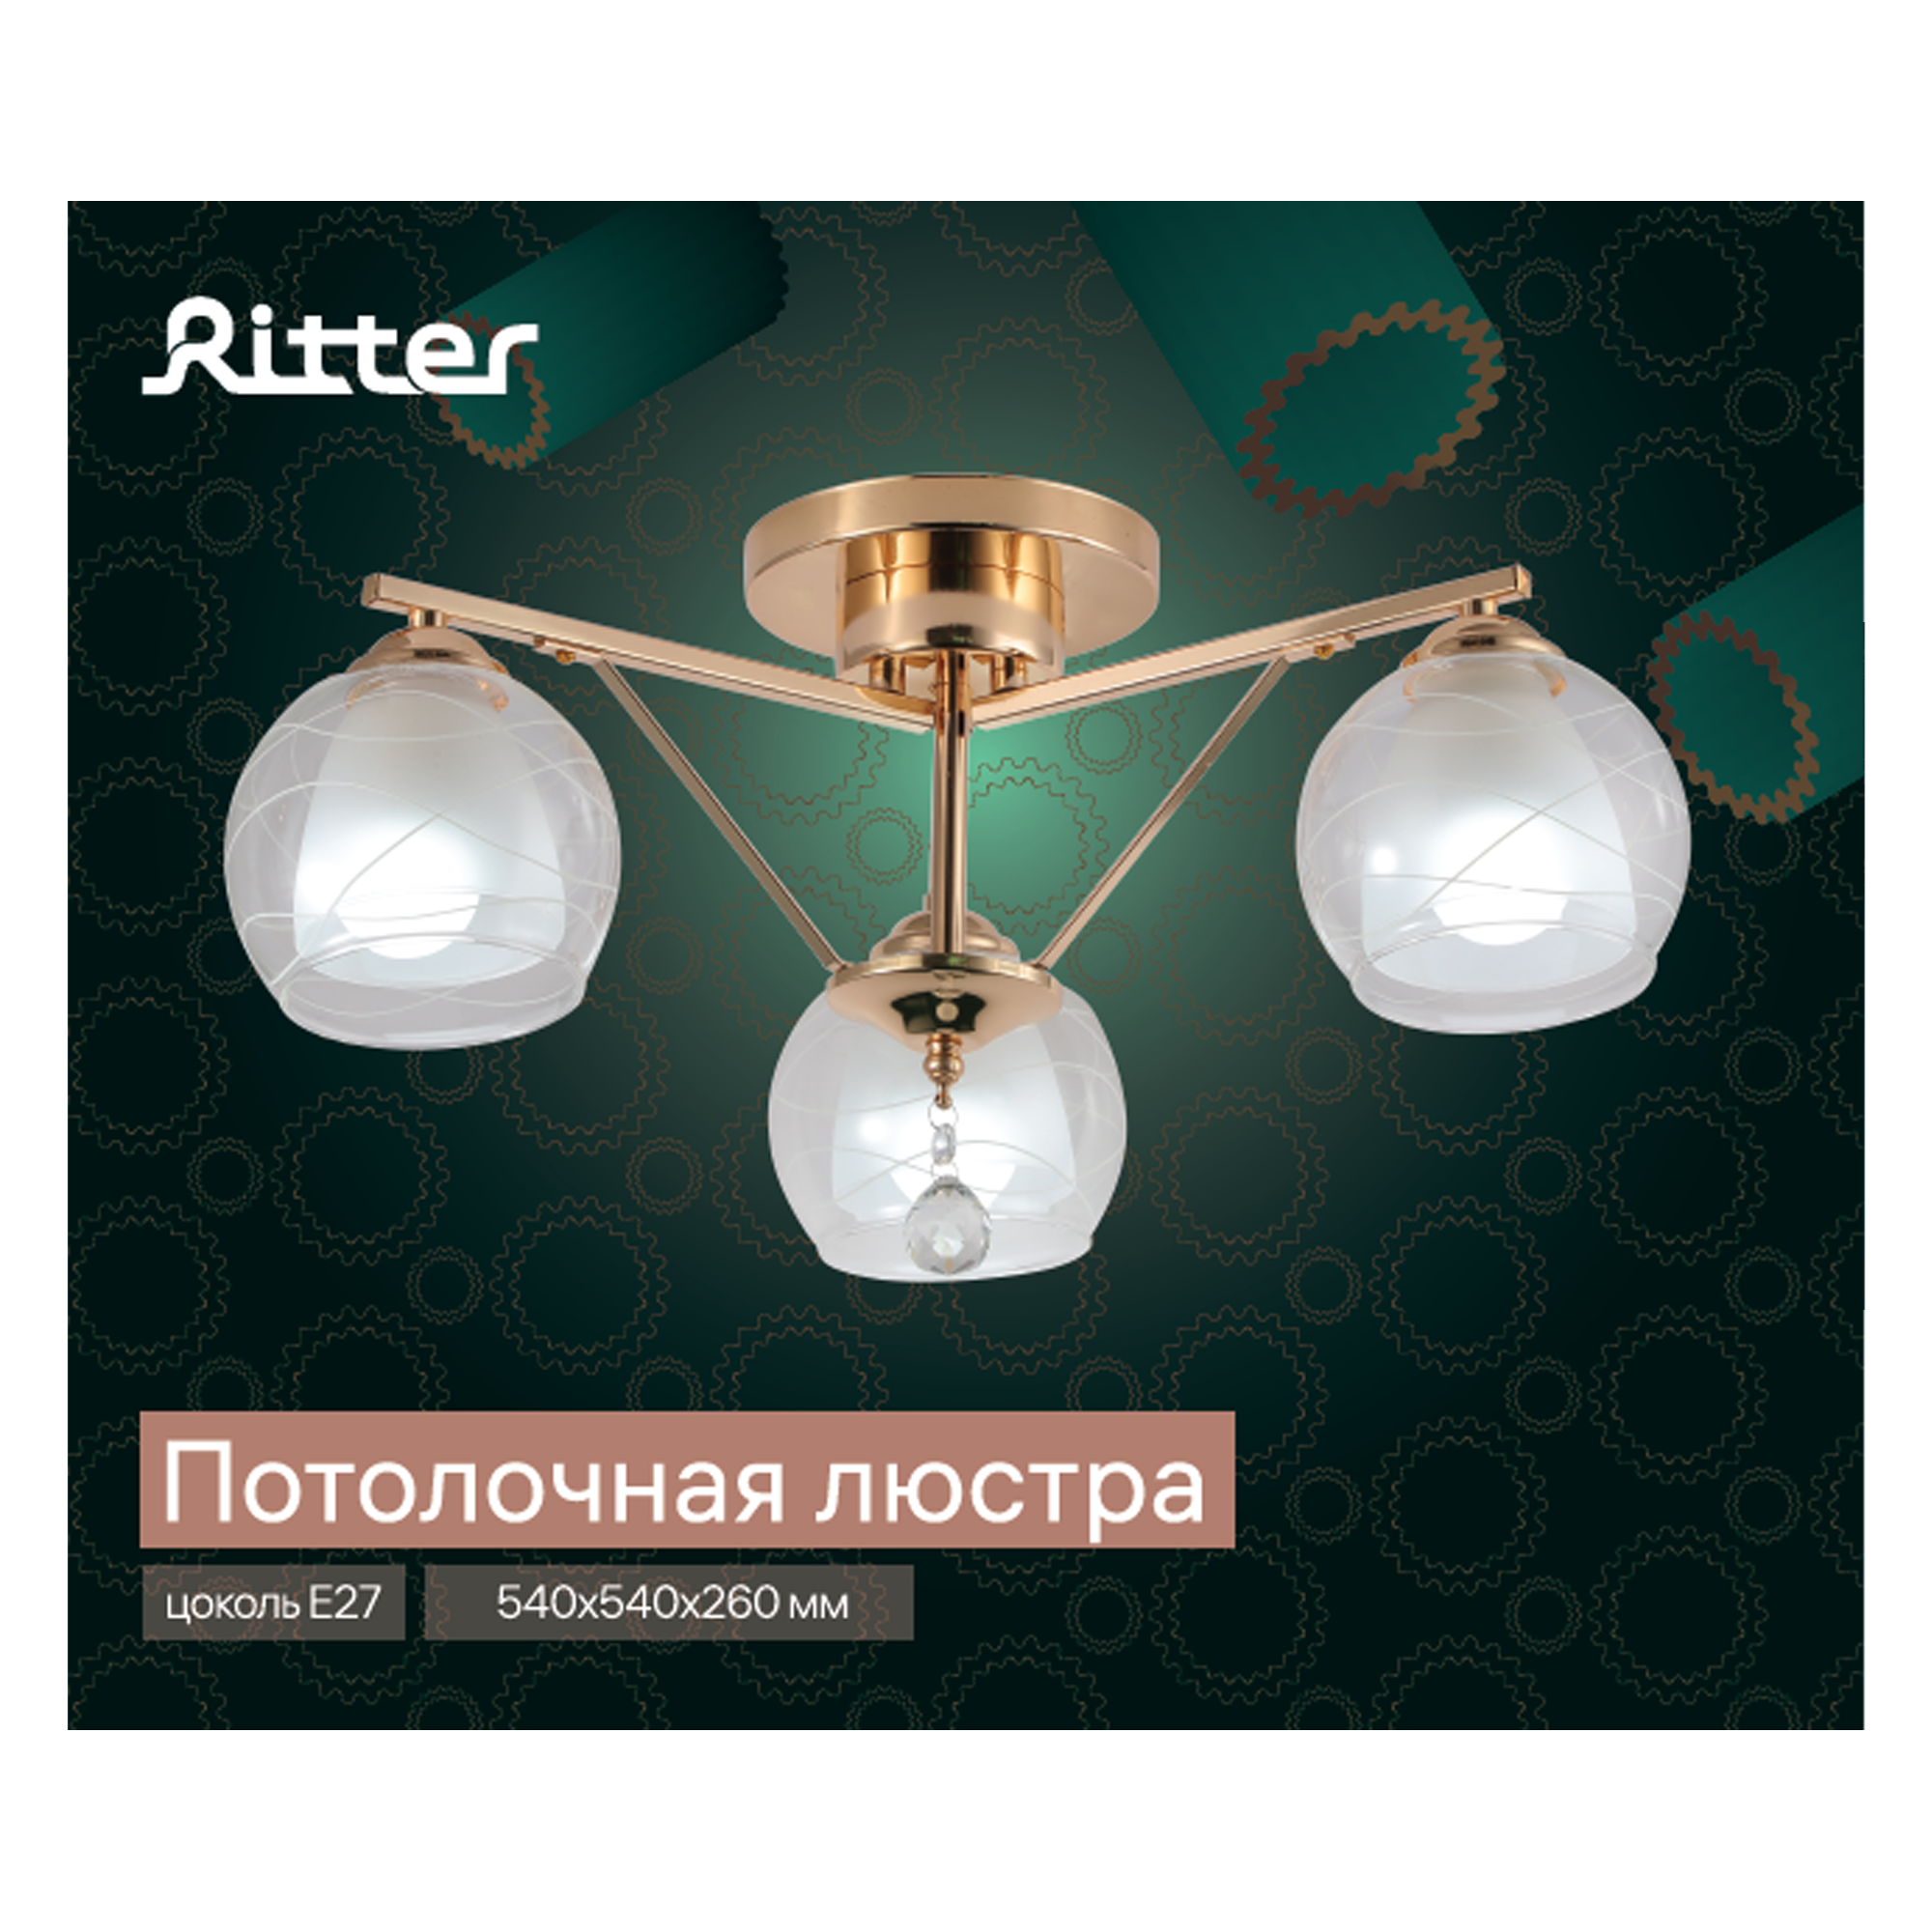 Потолочная люстра Ritter Taranto 52446 5